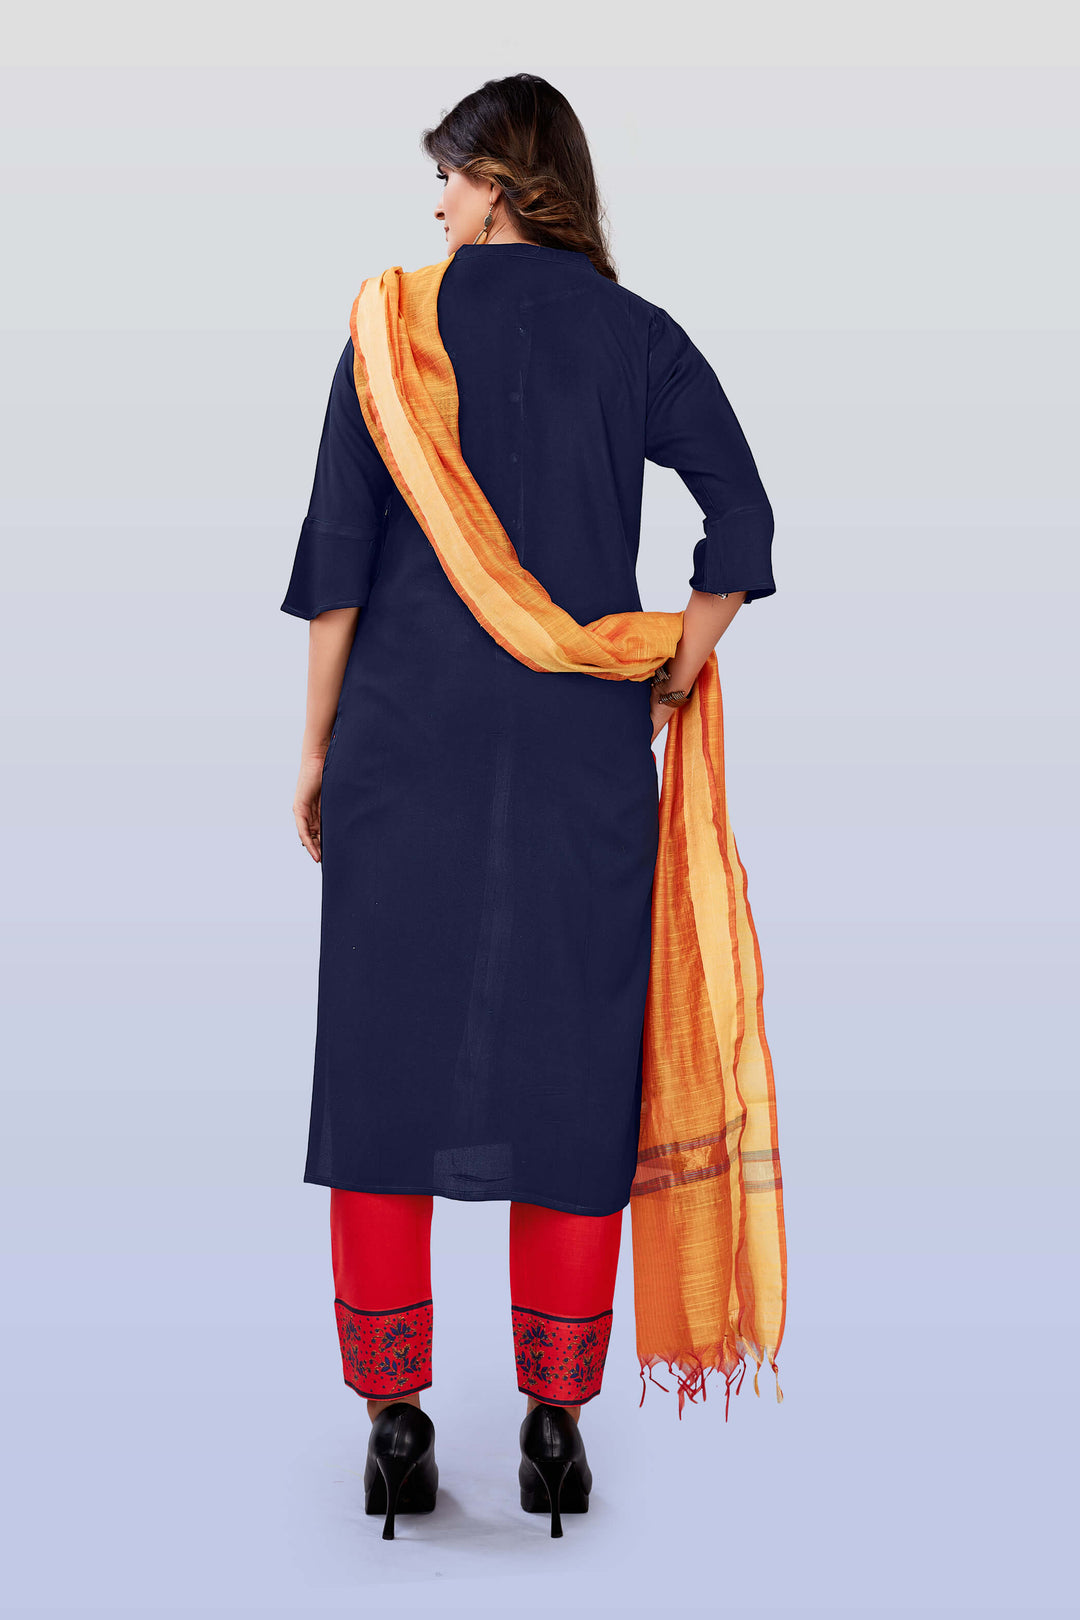 Designer Salwar suit Blue kurti